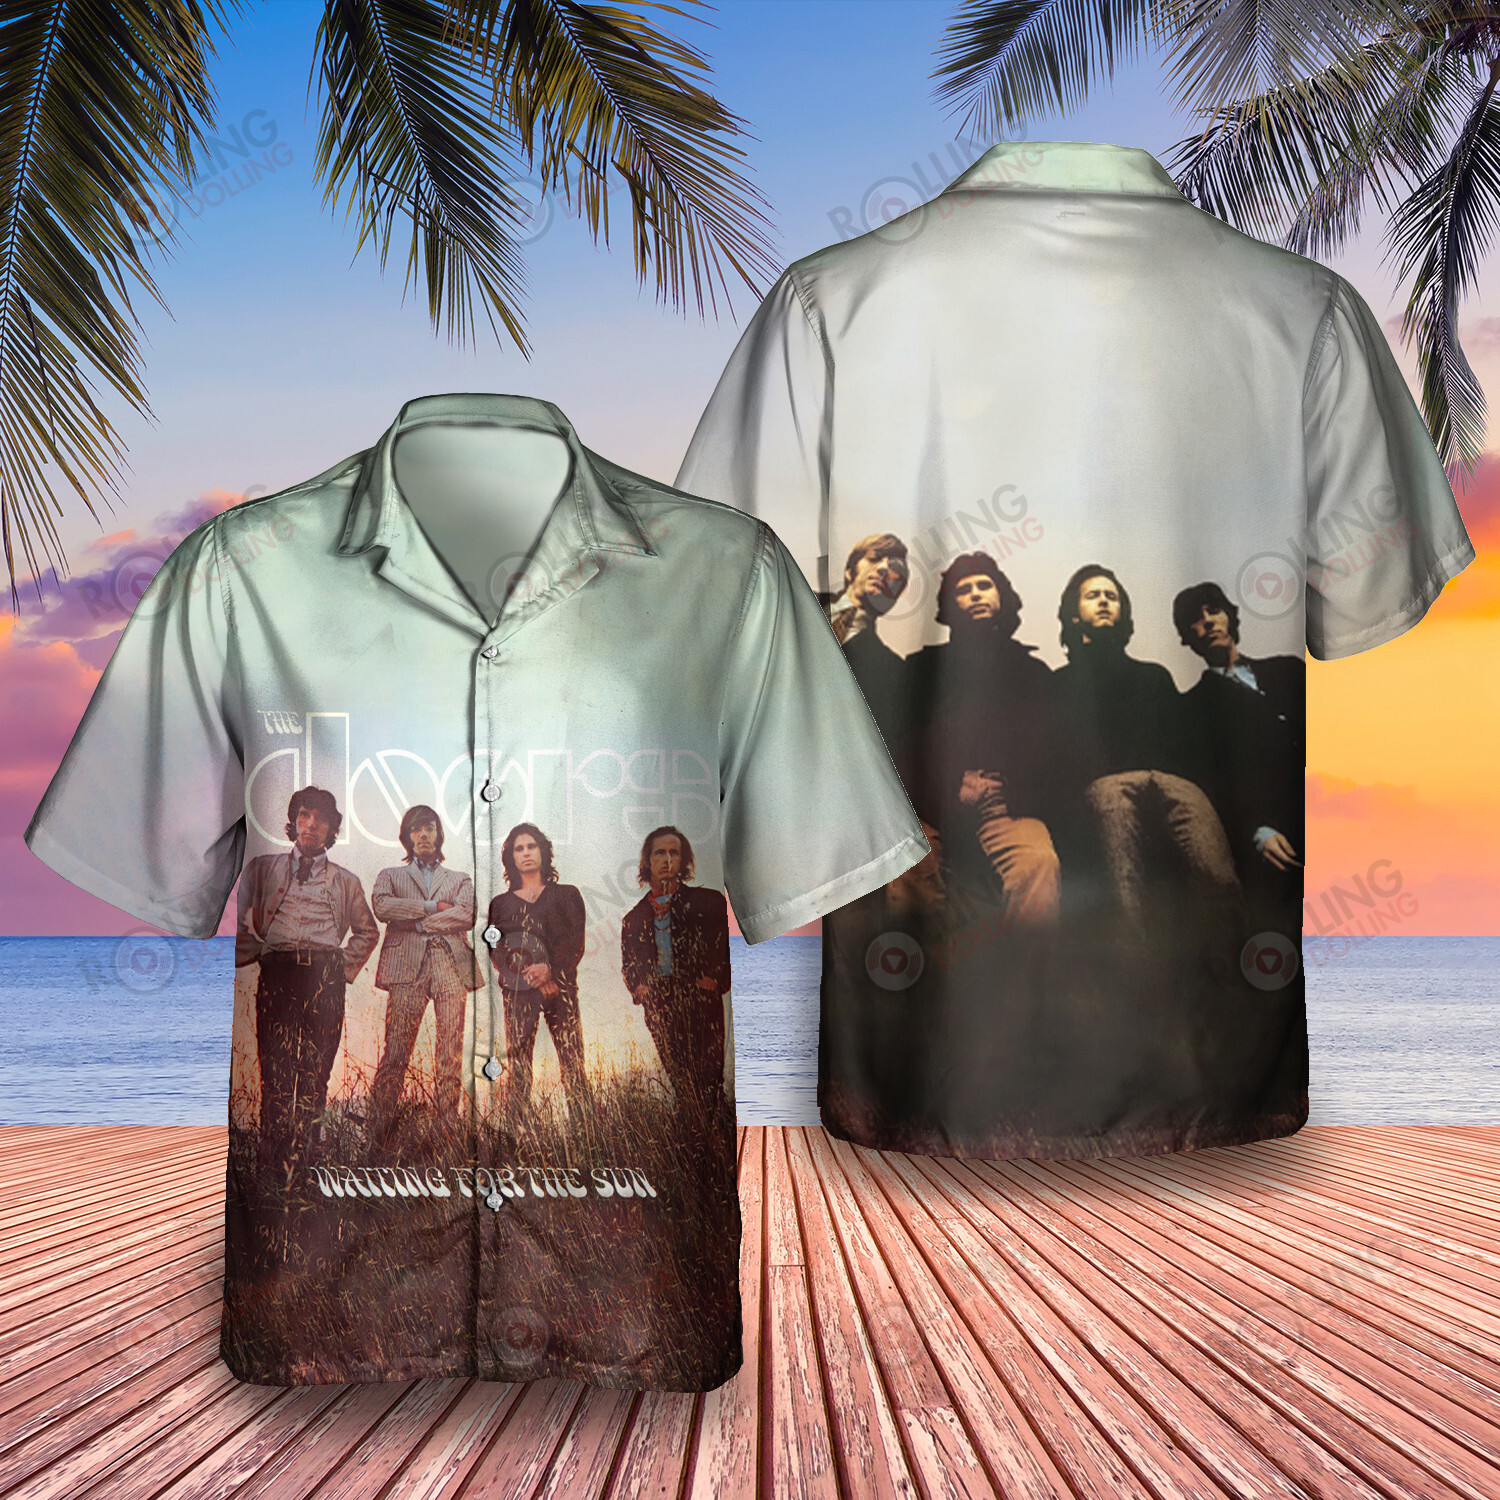 HOT The Doors Waiting For the Sun Album Tropical Shirt2